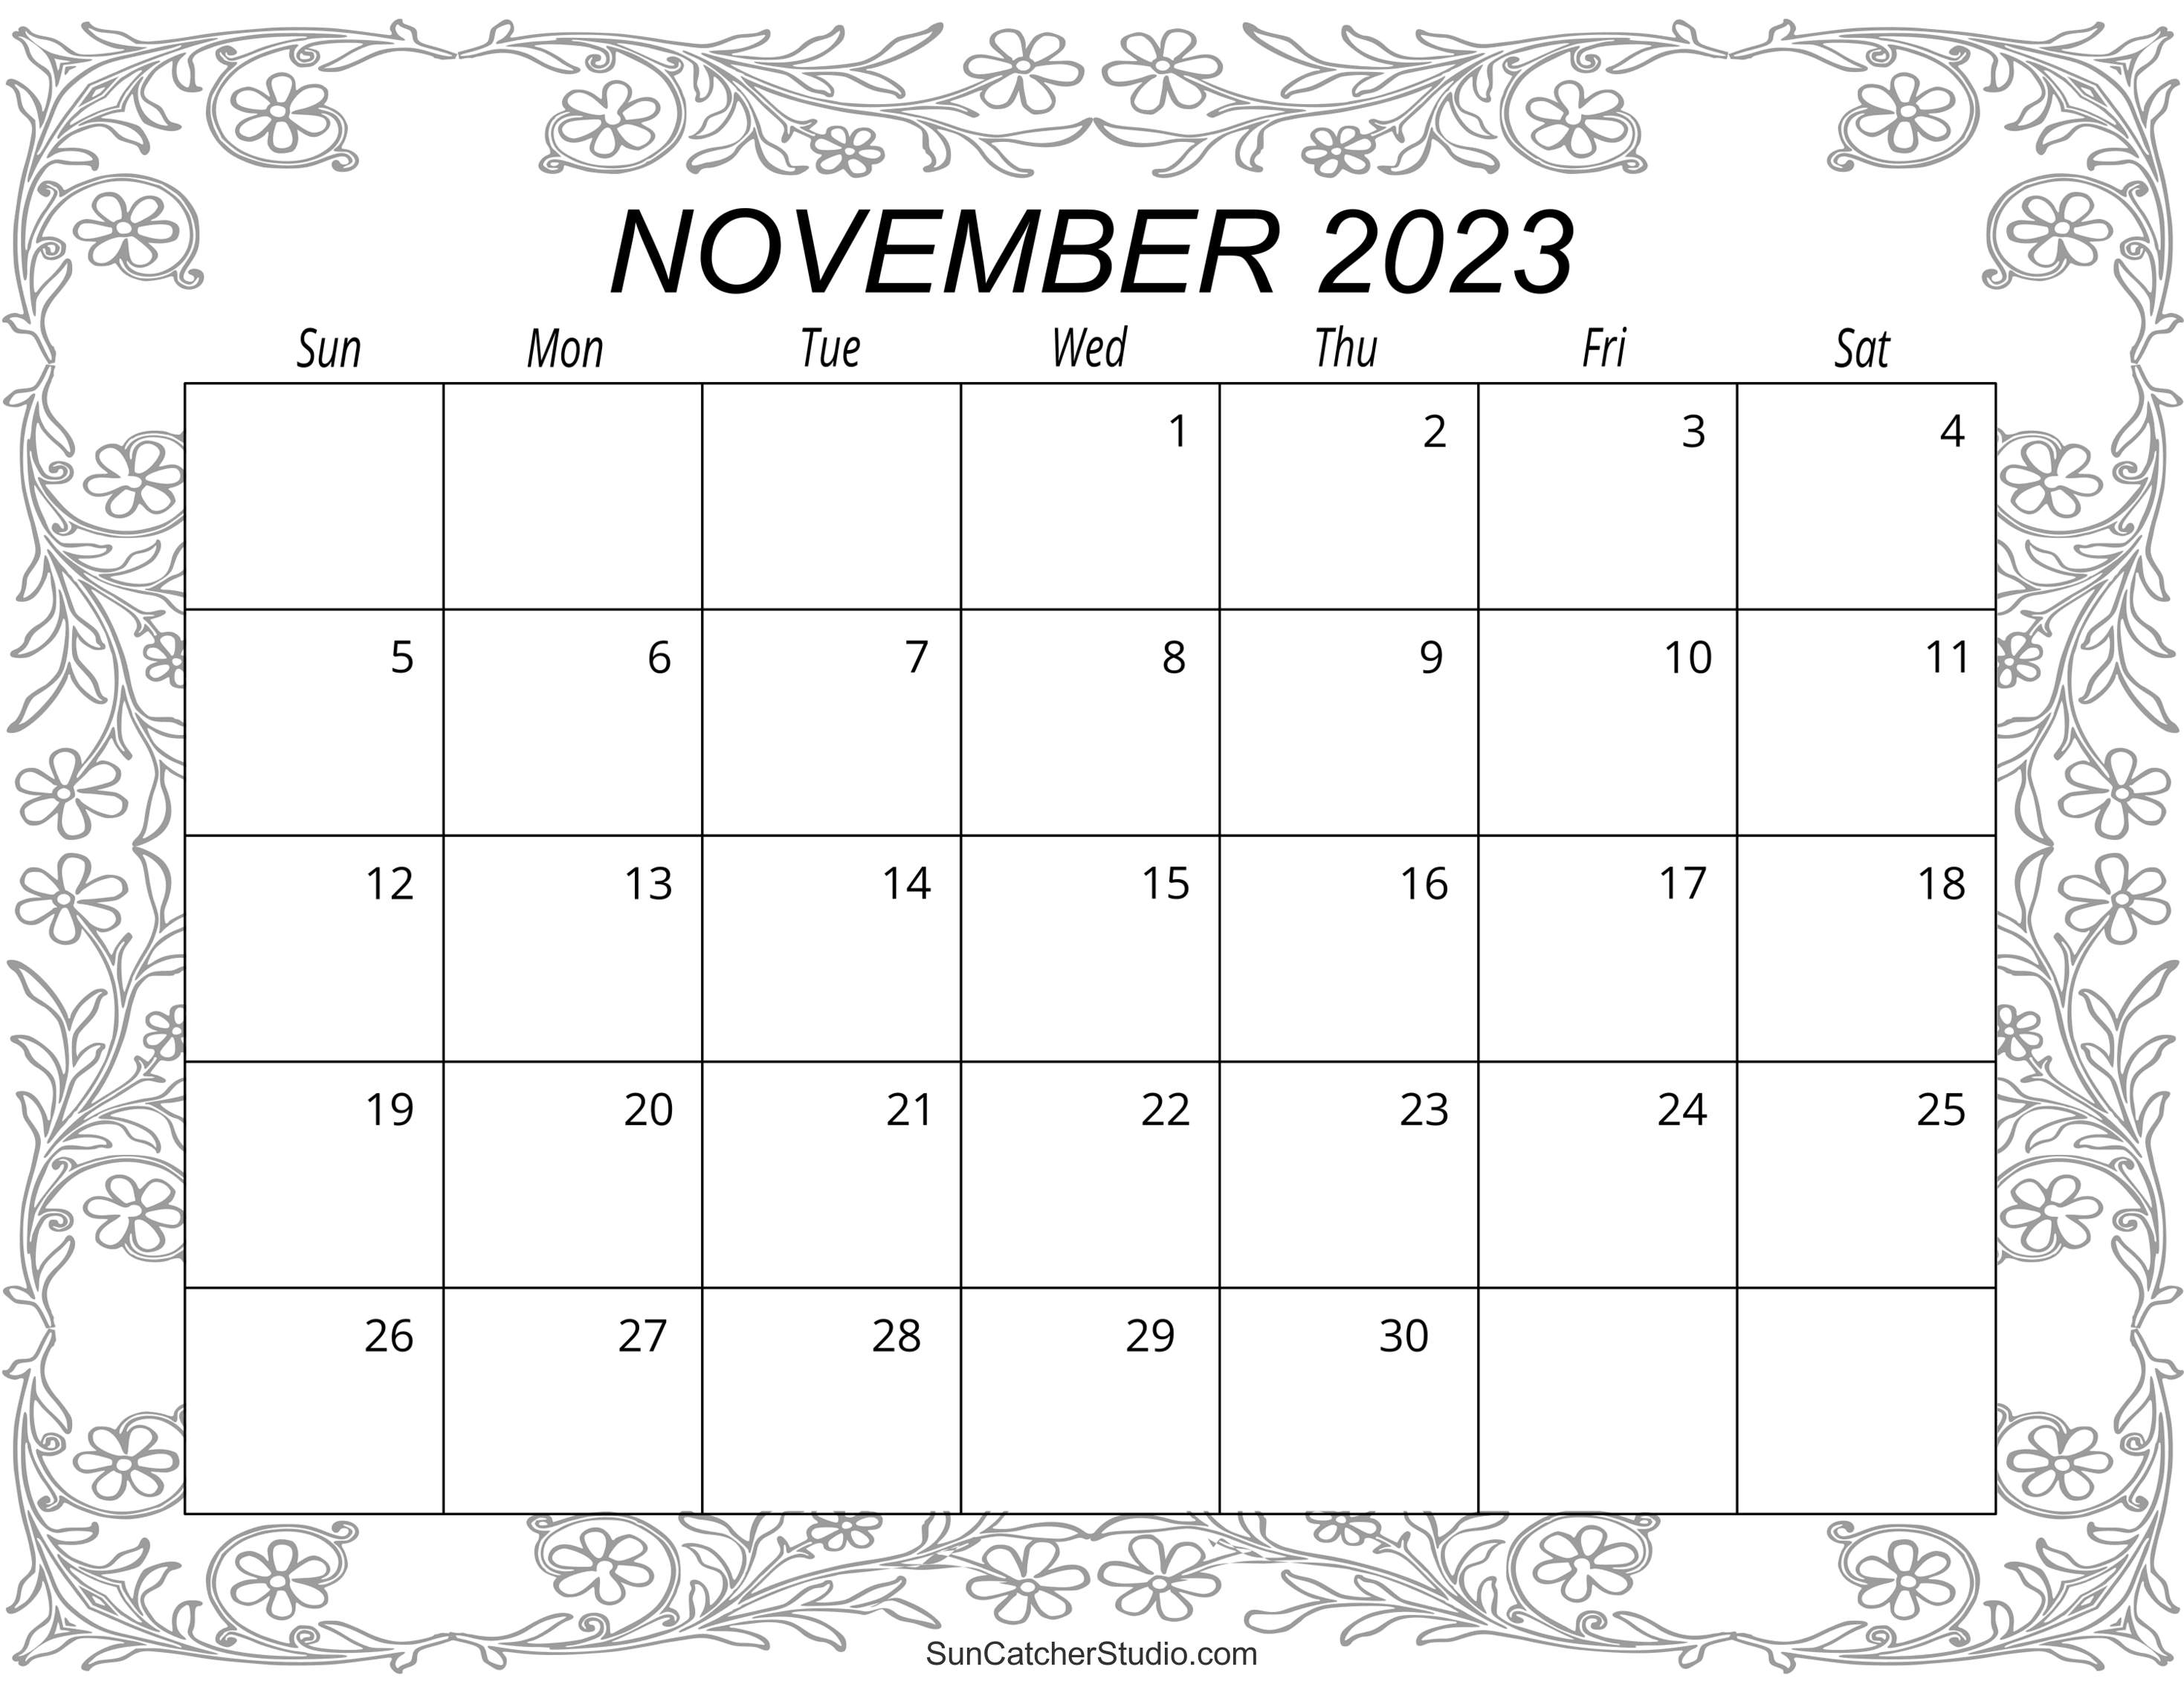 November 2023 Calendar Free Printable Diy Projects Patterns Monograms Designs Templates